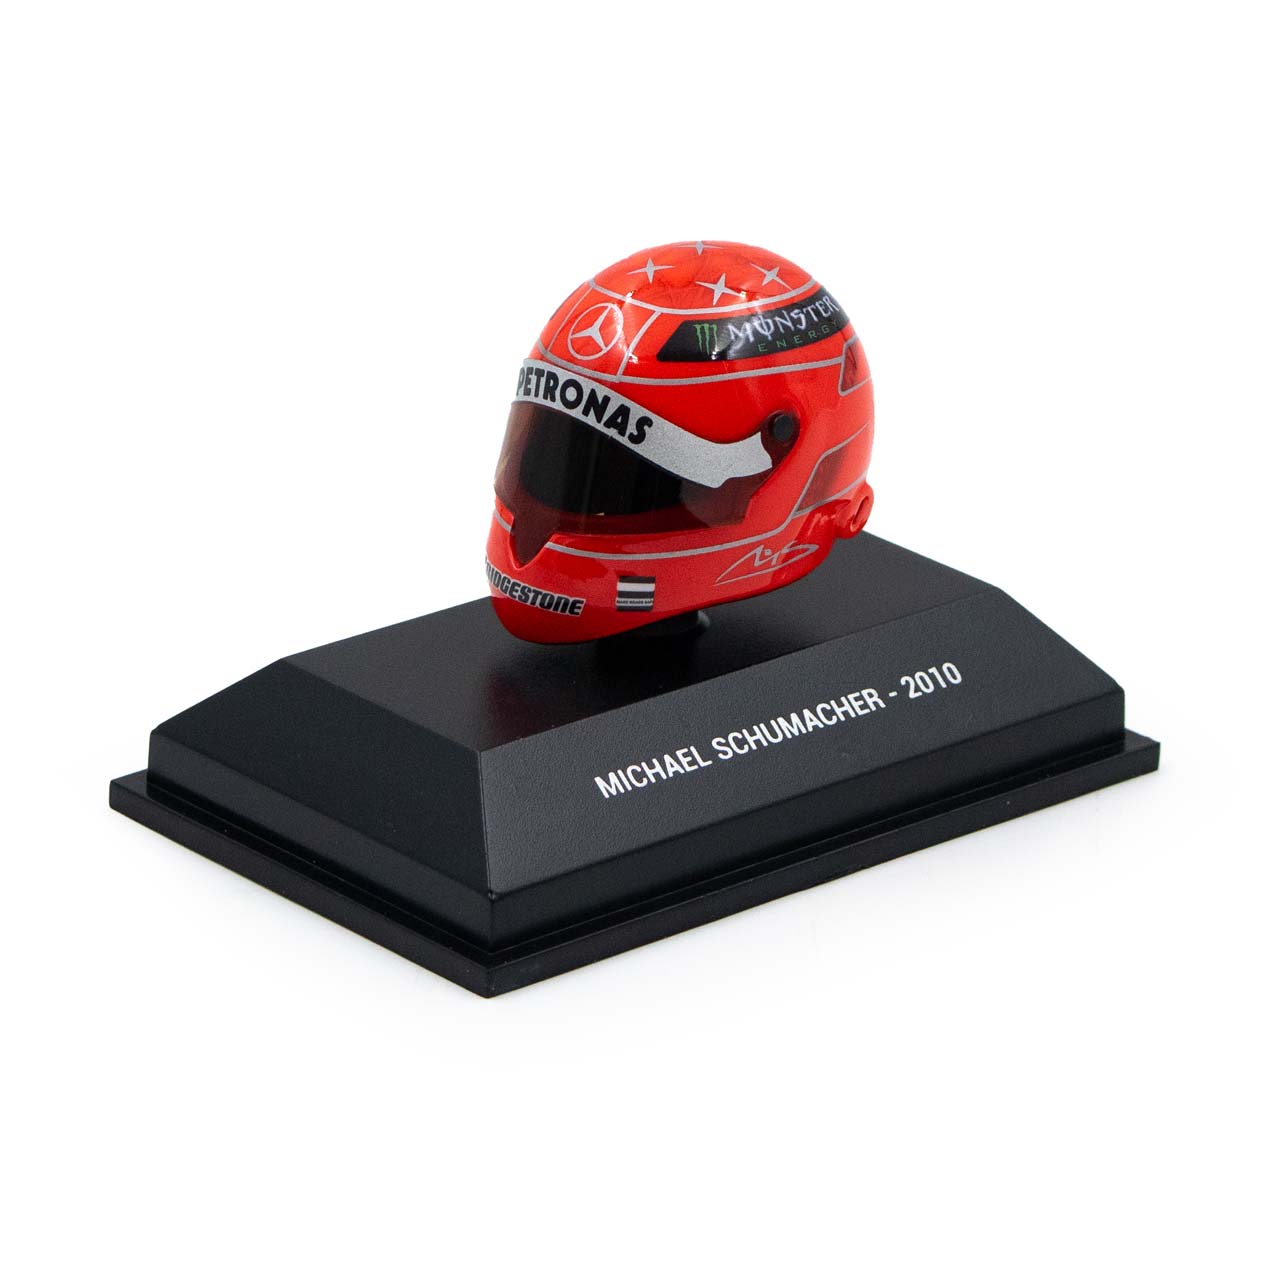 Michael Schumacher miniature helmet 2010 1:8